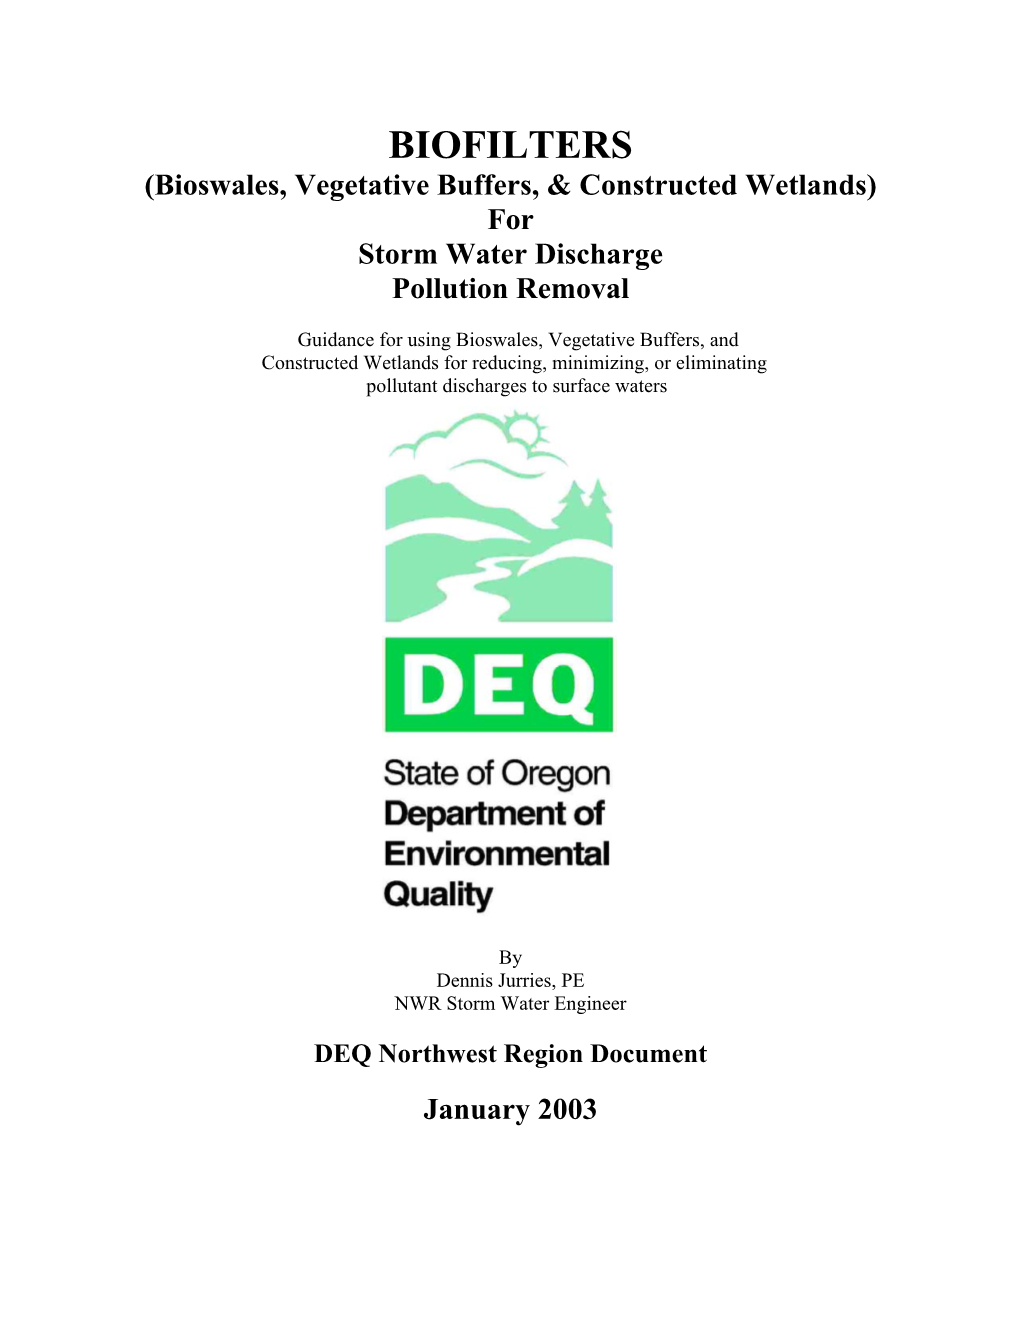 Biofilters (Bioswales, Vegetative Buffers, & Constructed Wetlands)